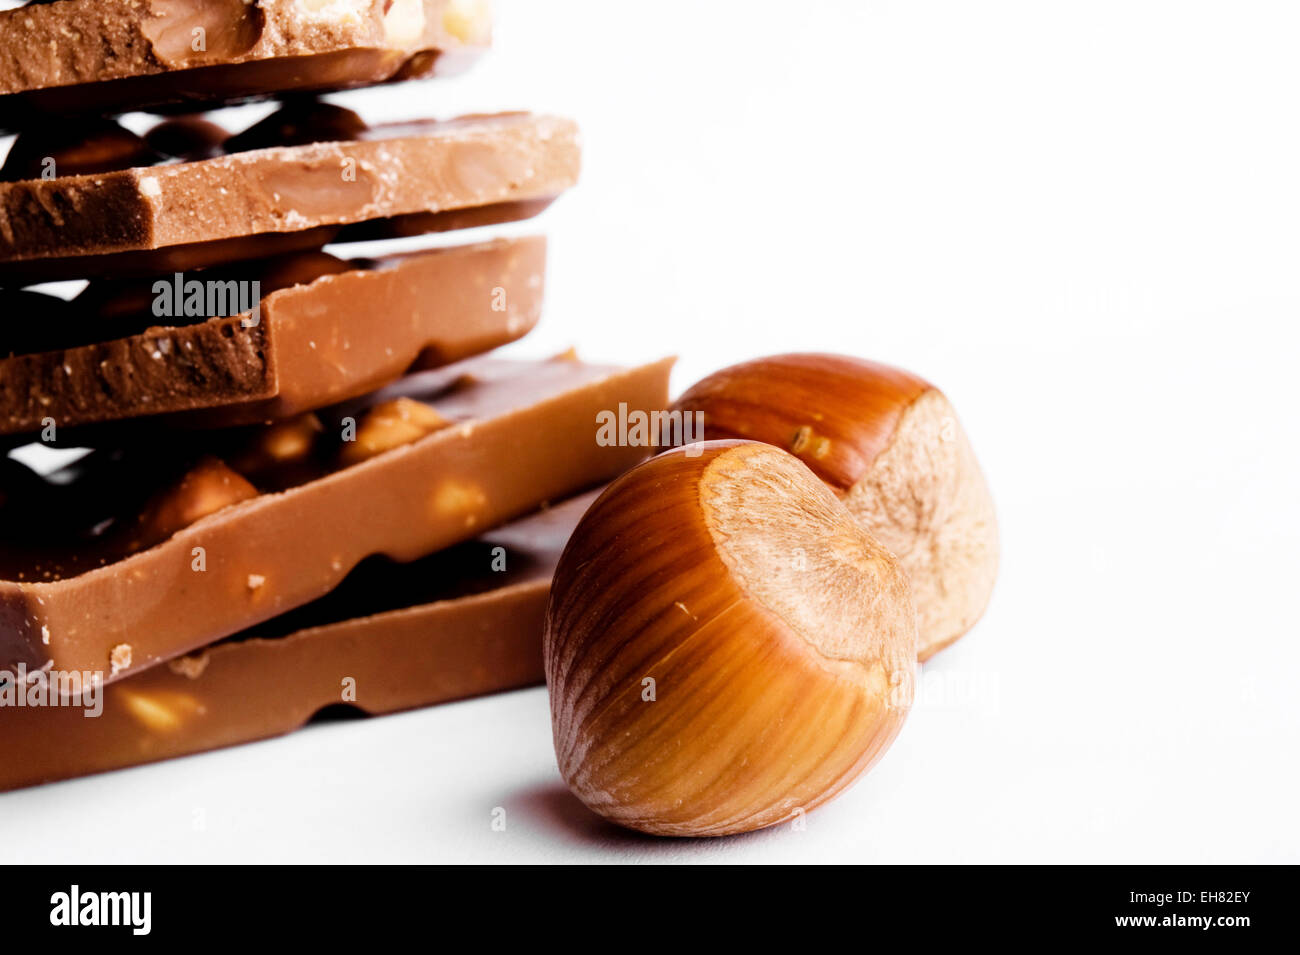 chocolate and hazelnuts Stock Photo